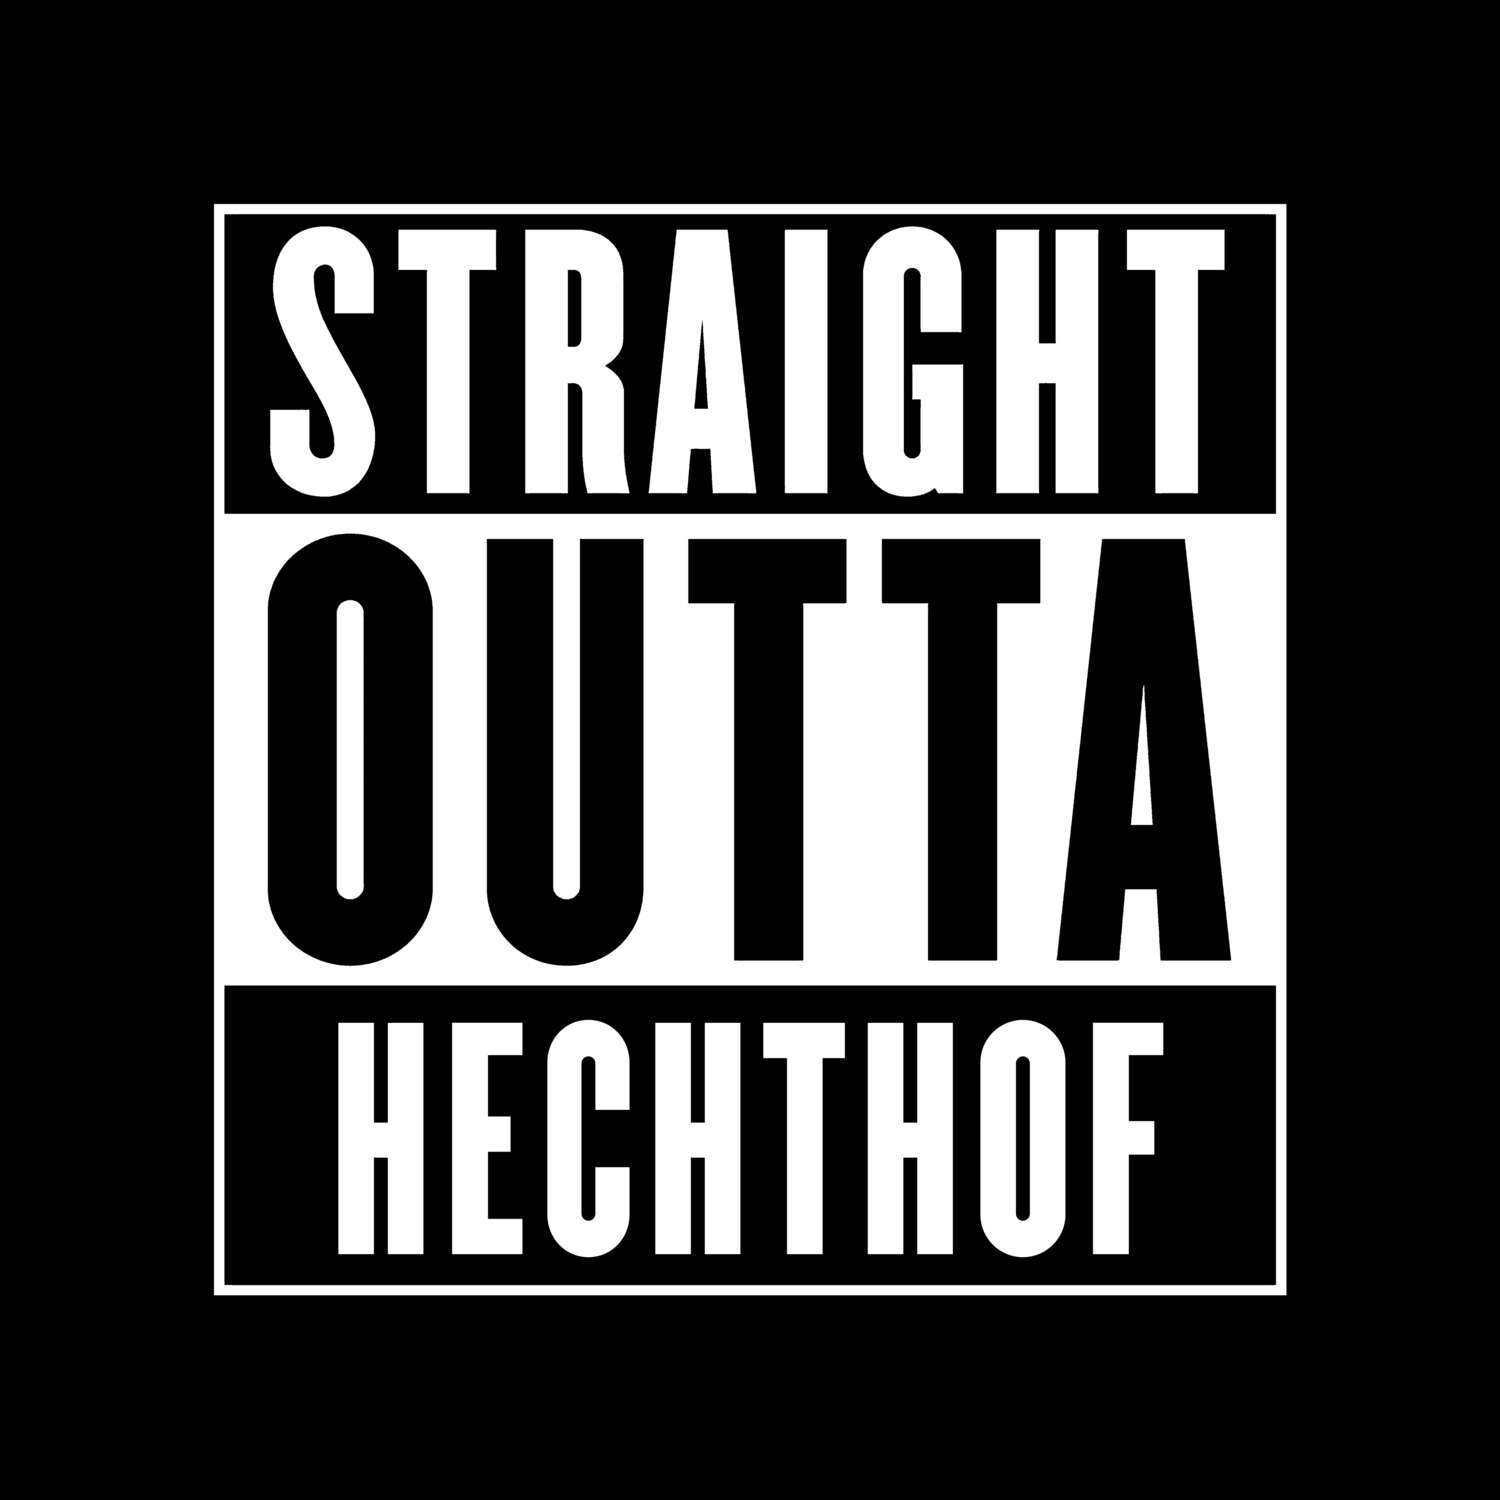 Hechthof T-Shirt »Straight Outta«